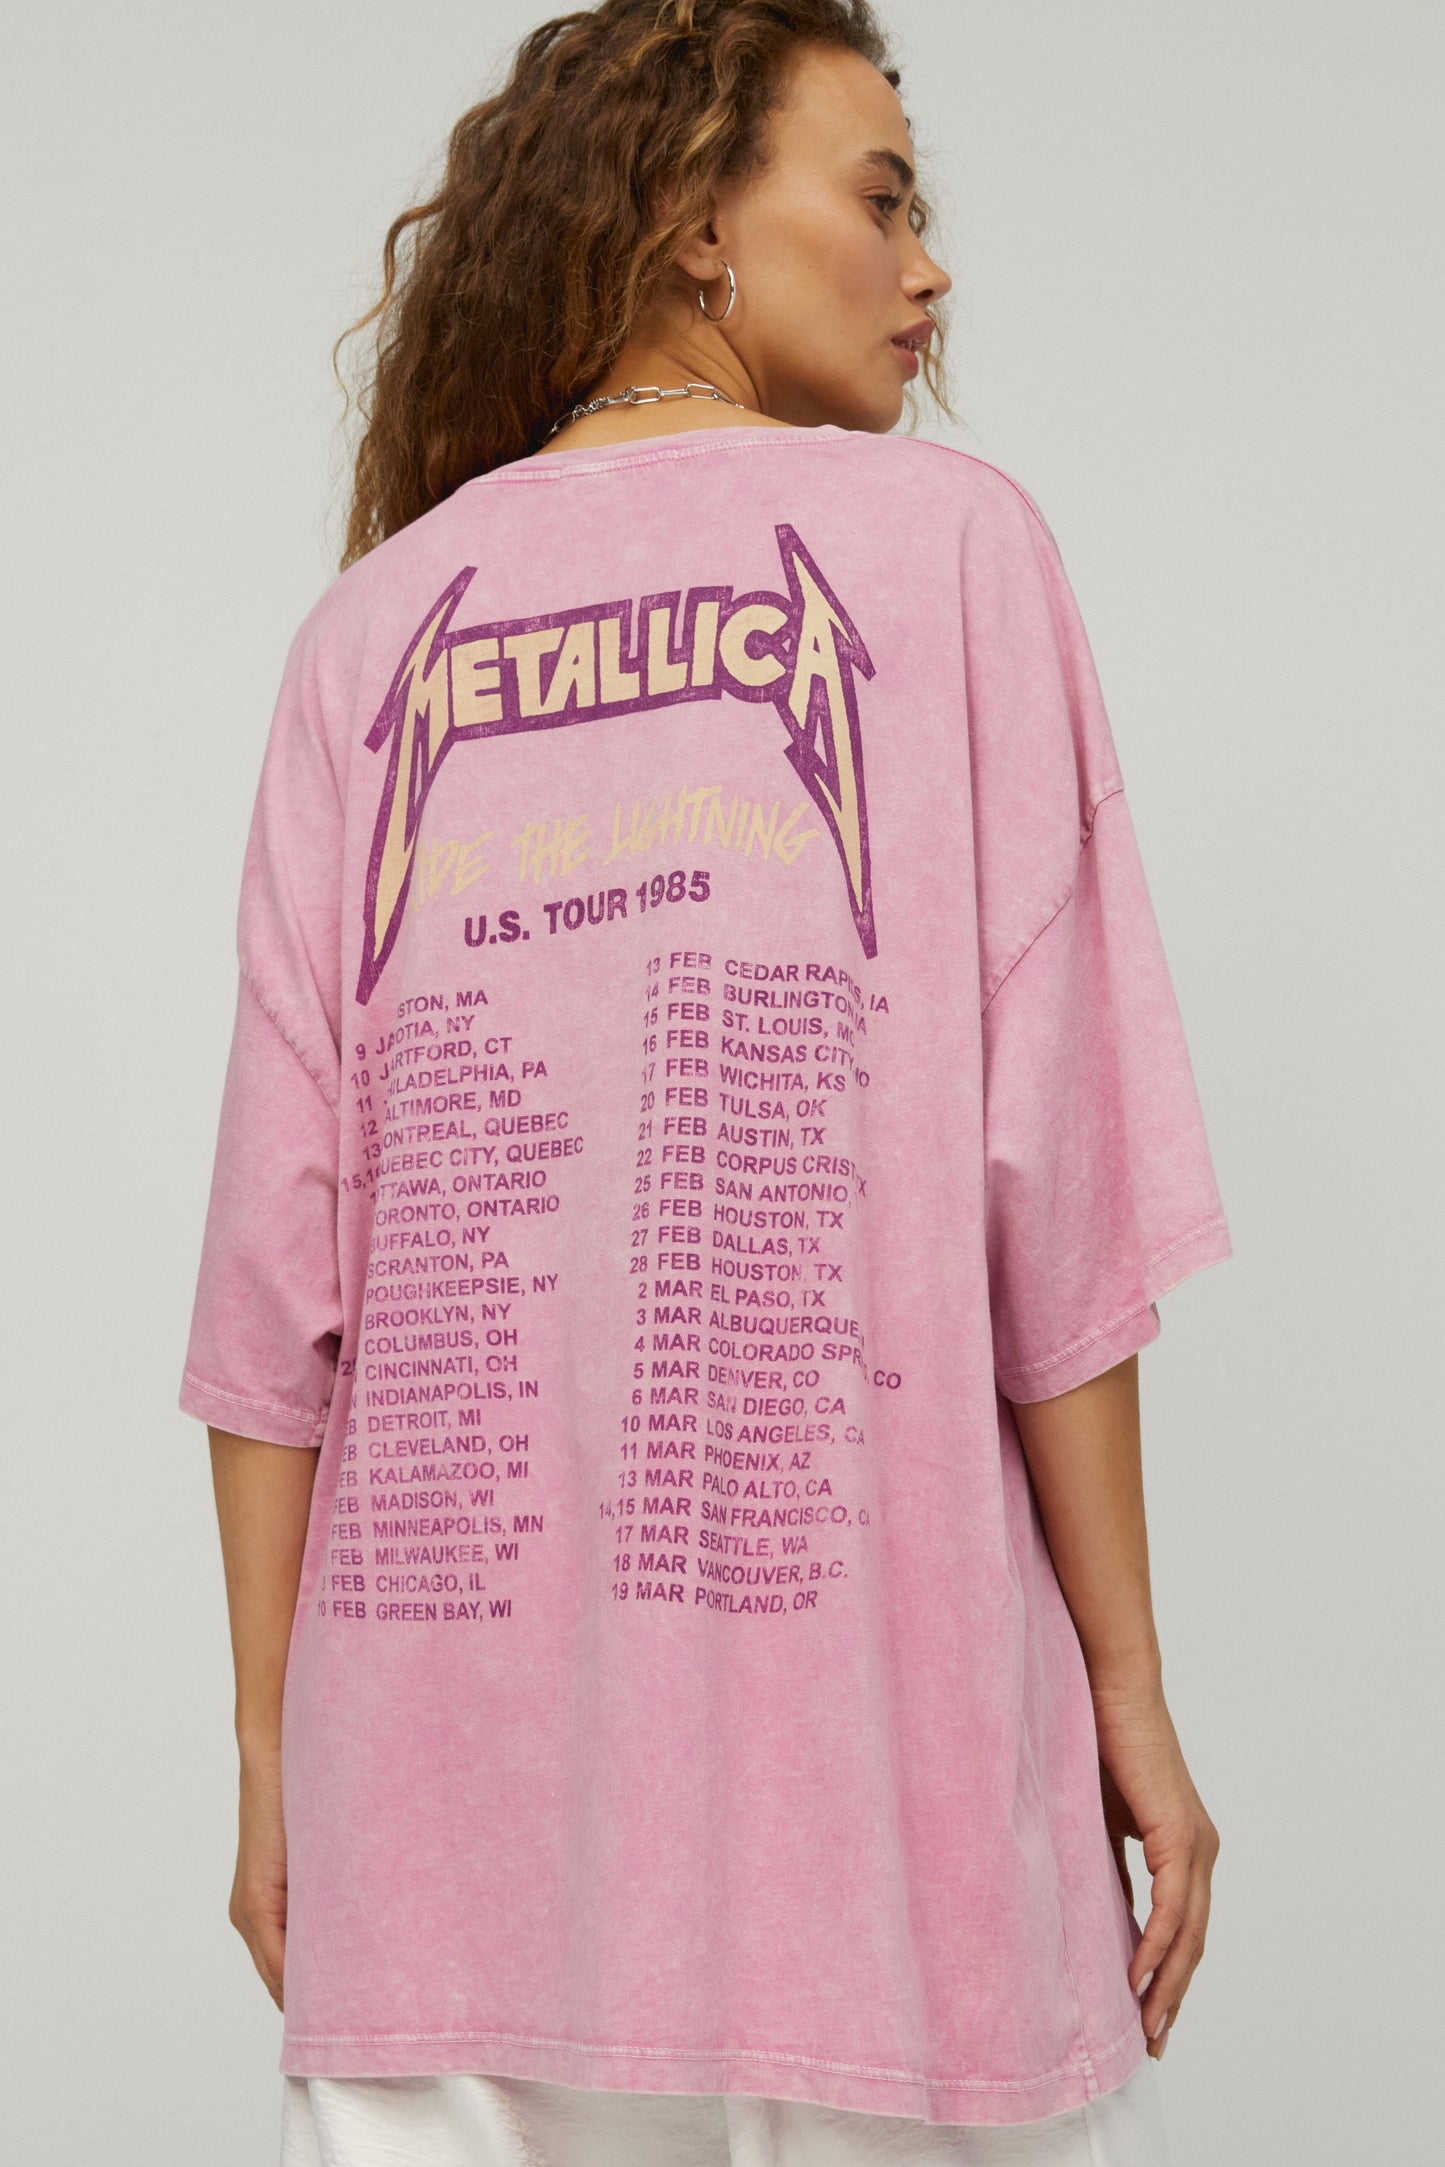 Metallica tour dates